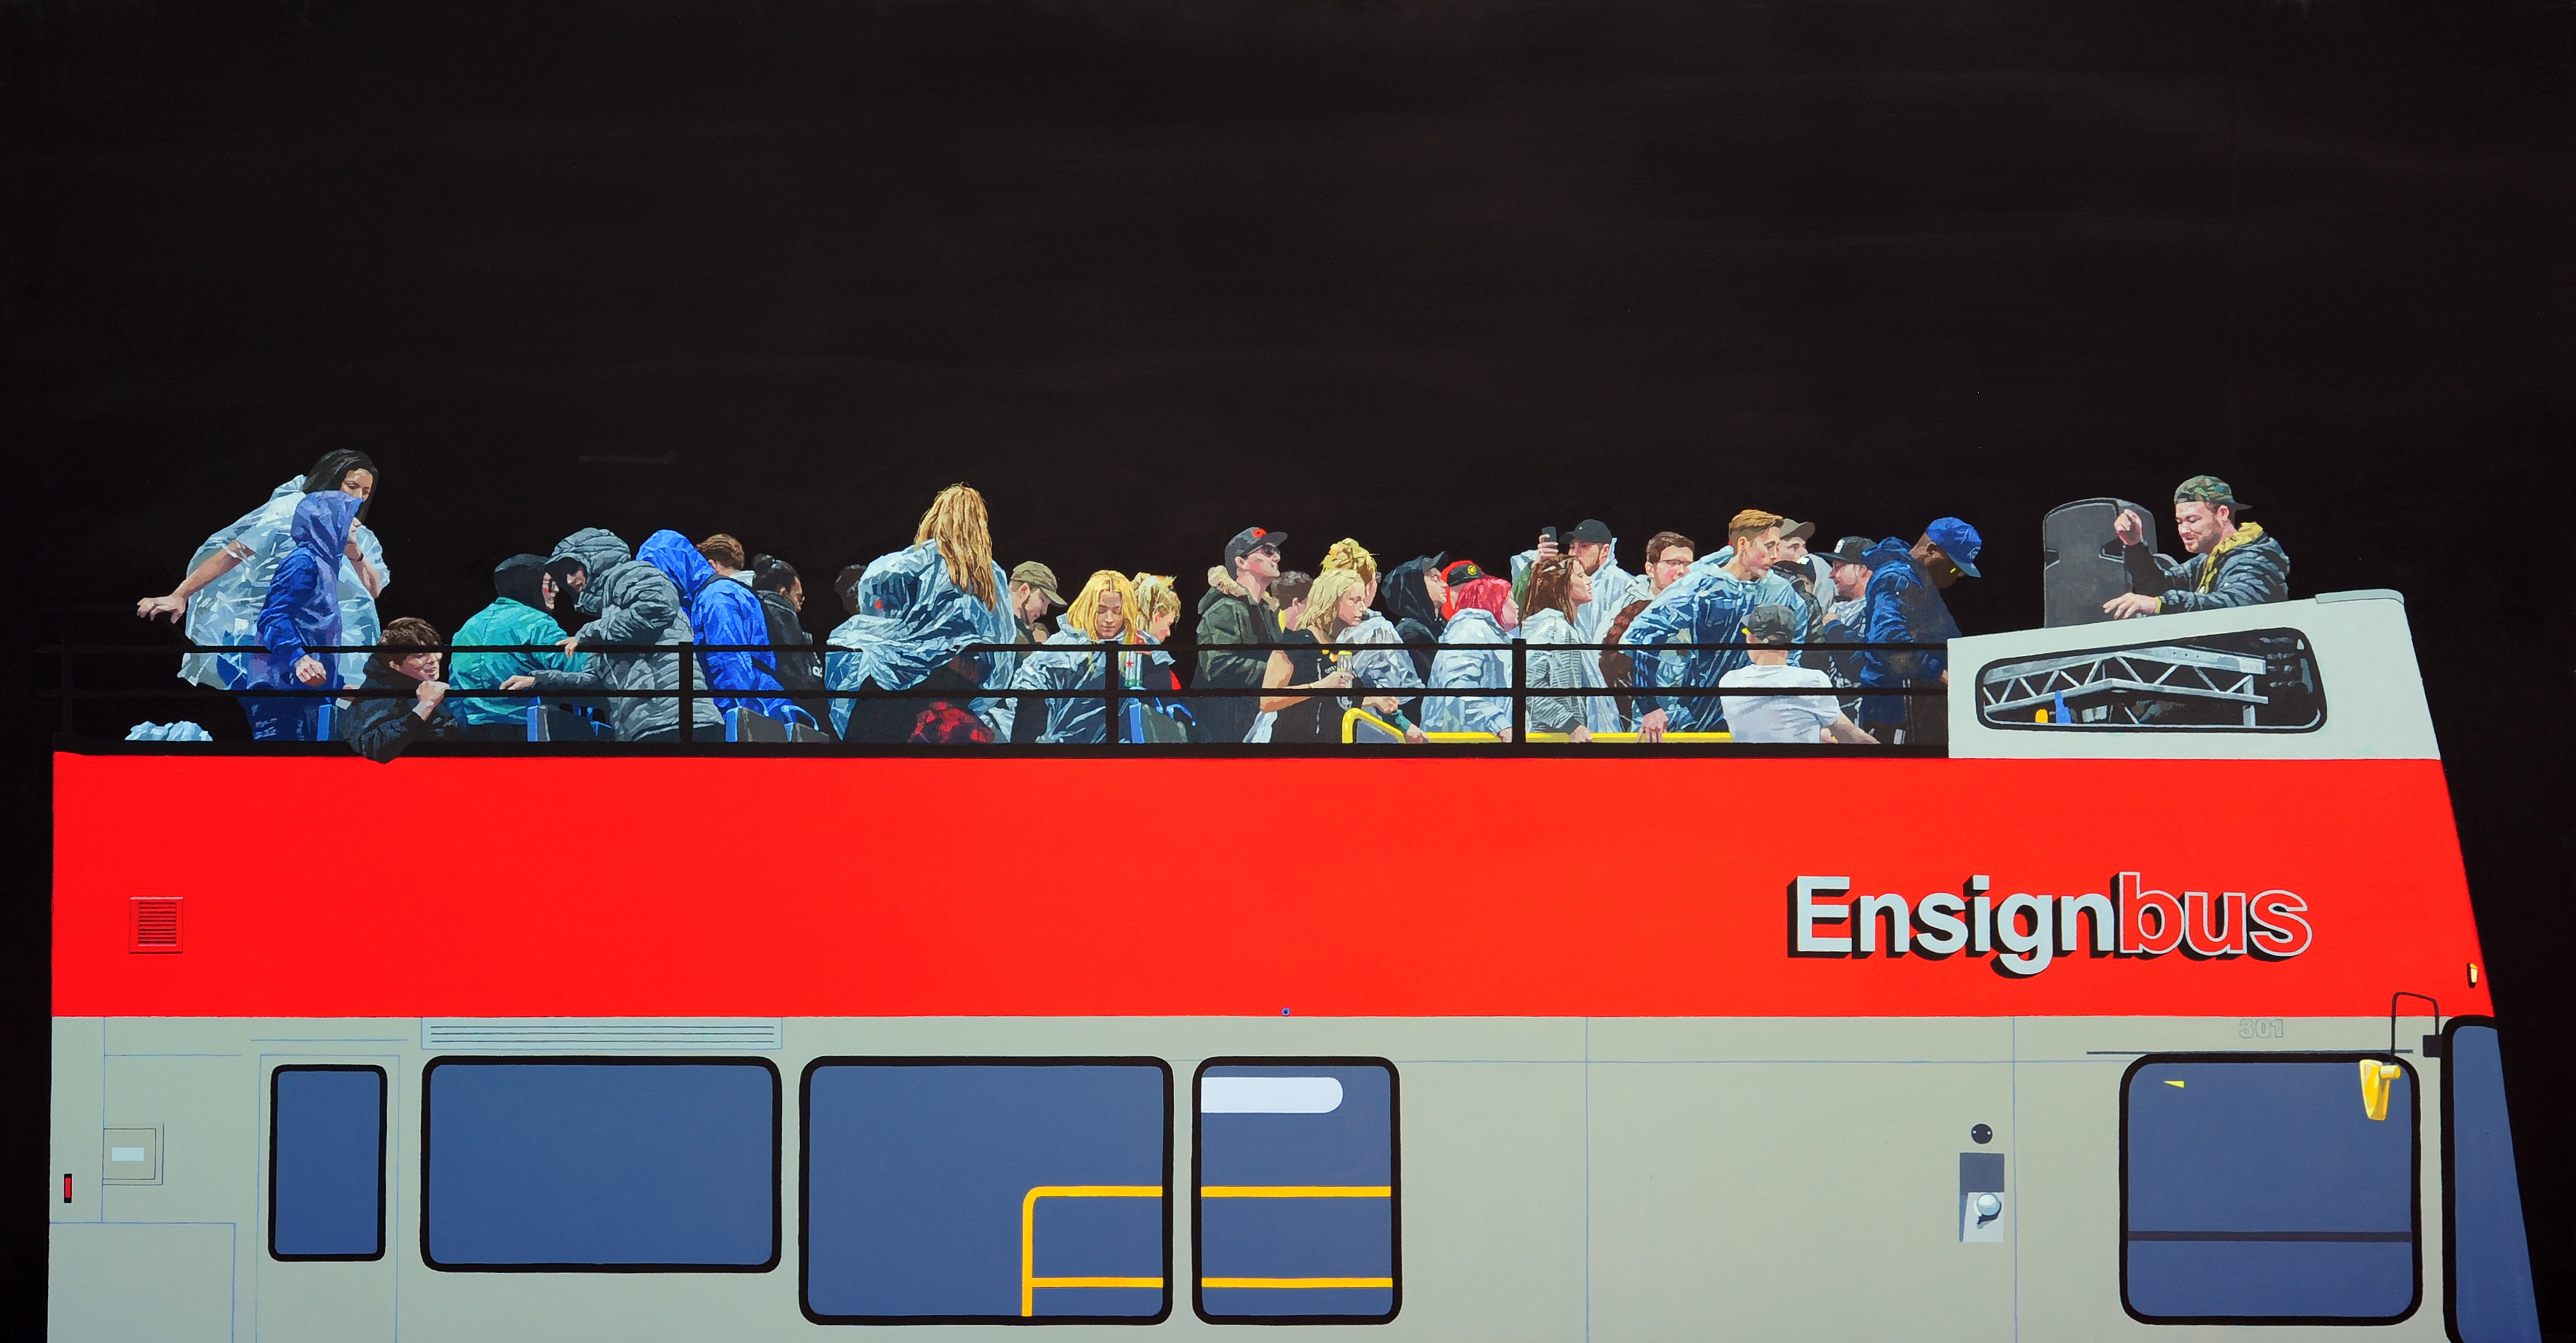 Last bus to london 180-97 Oil on canvas 2019.jpg